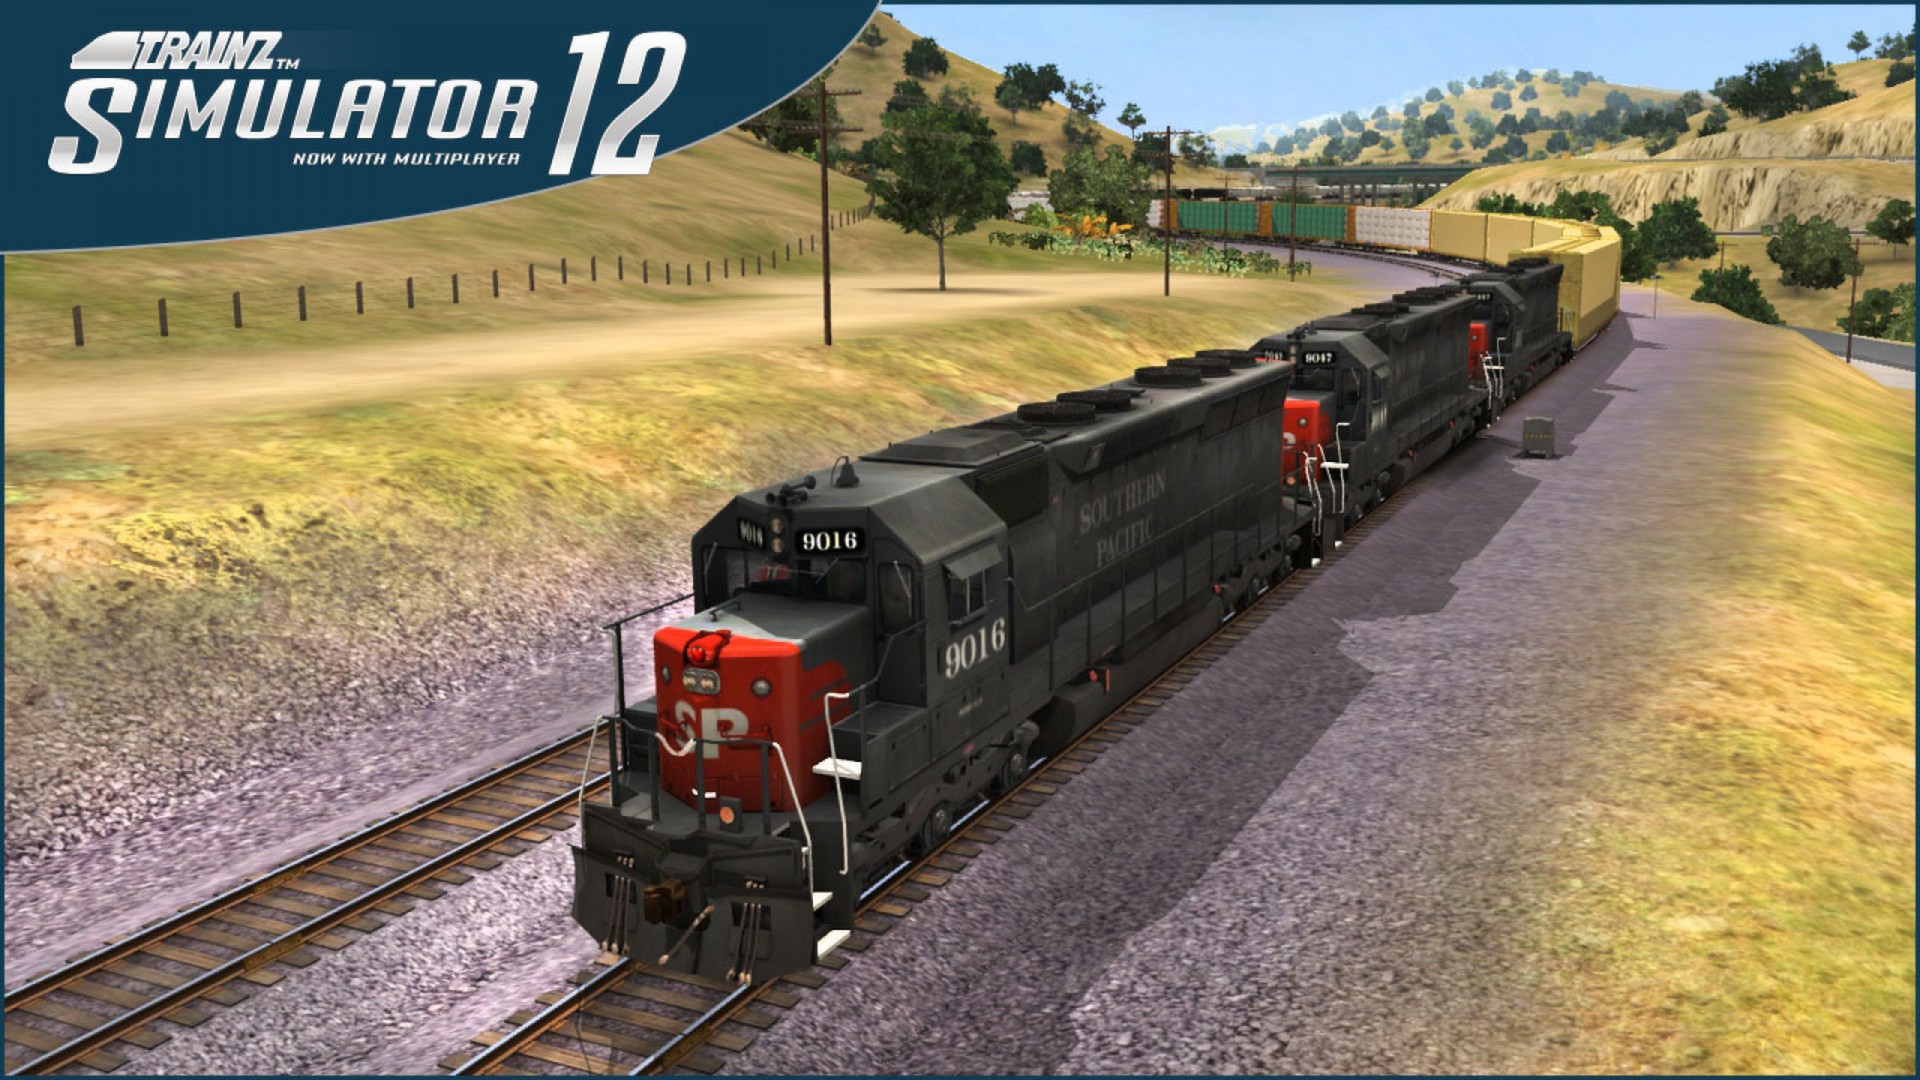 download free trainz simulator 12